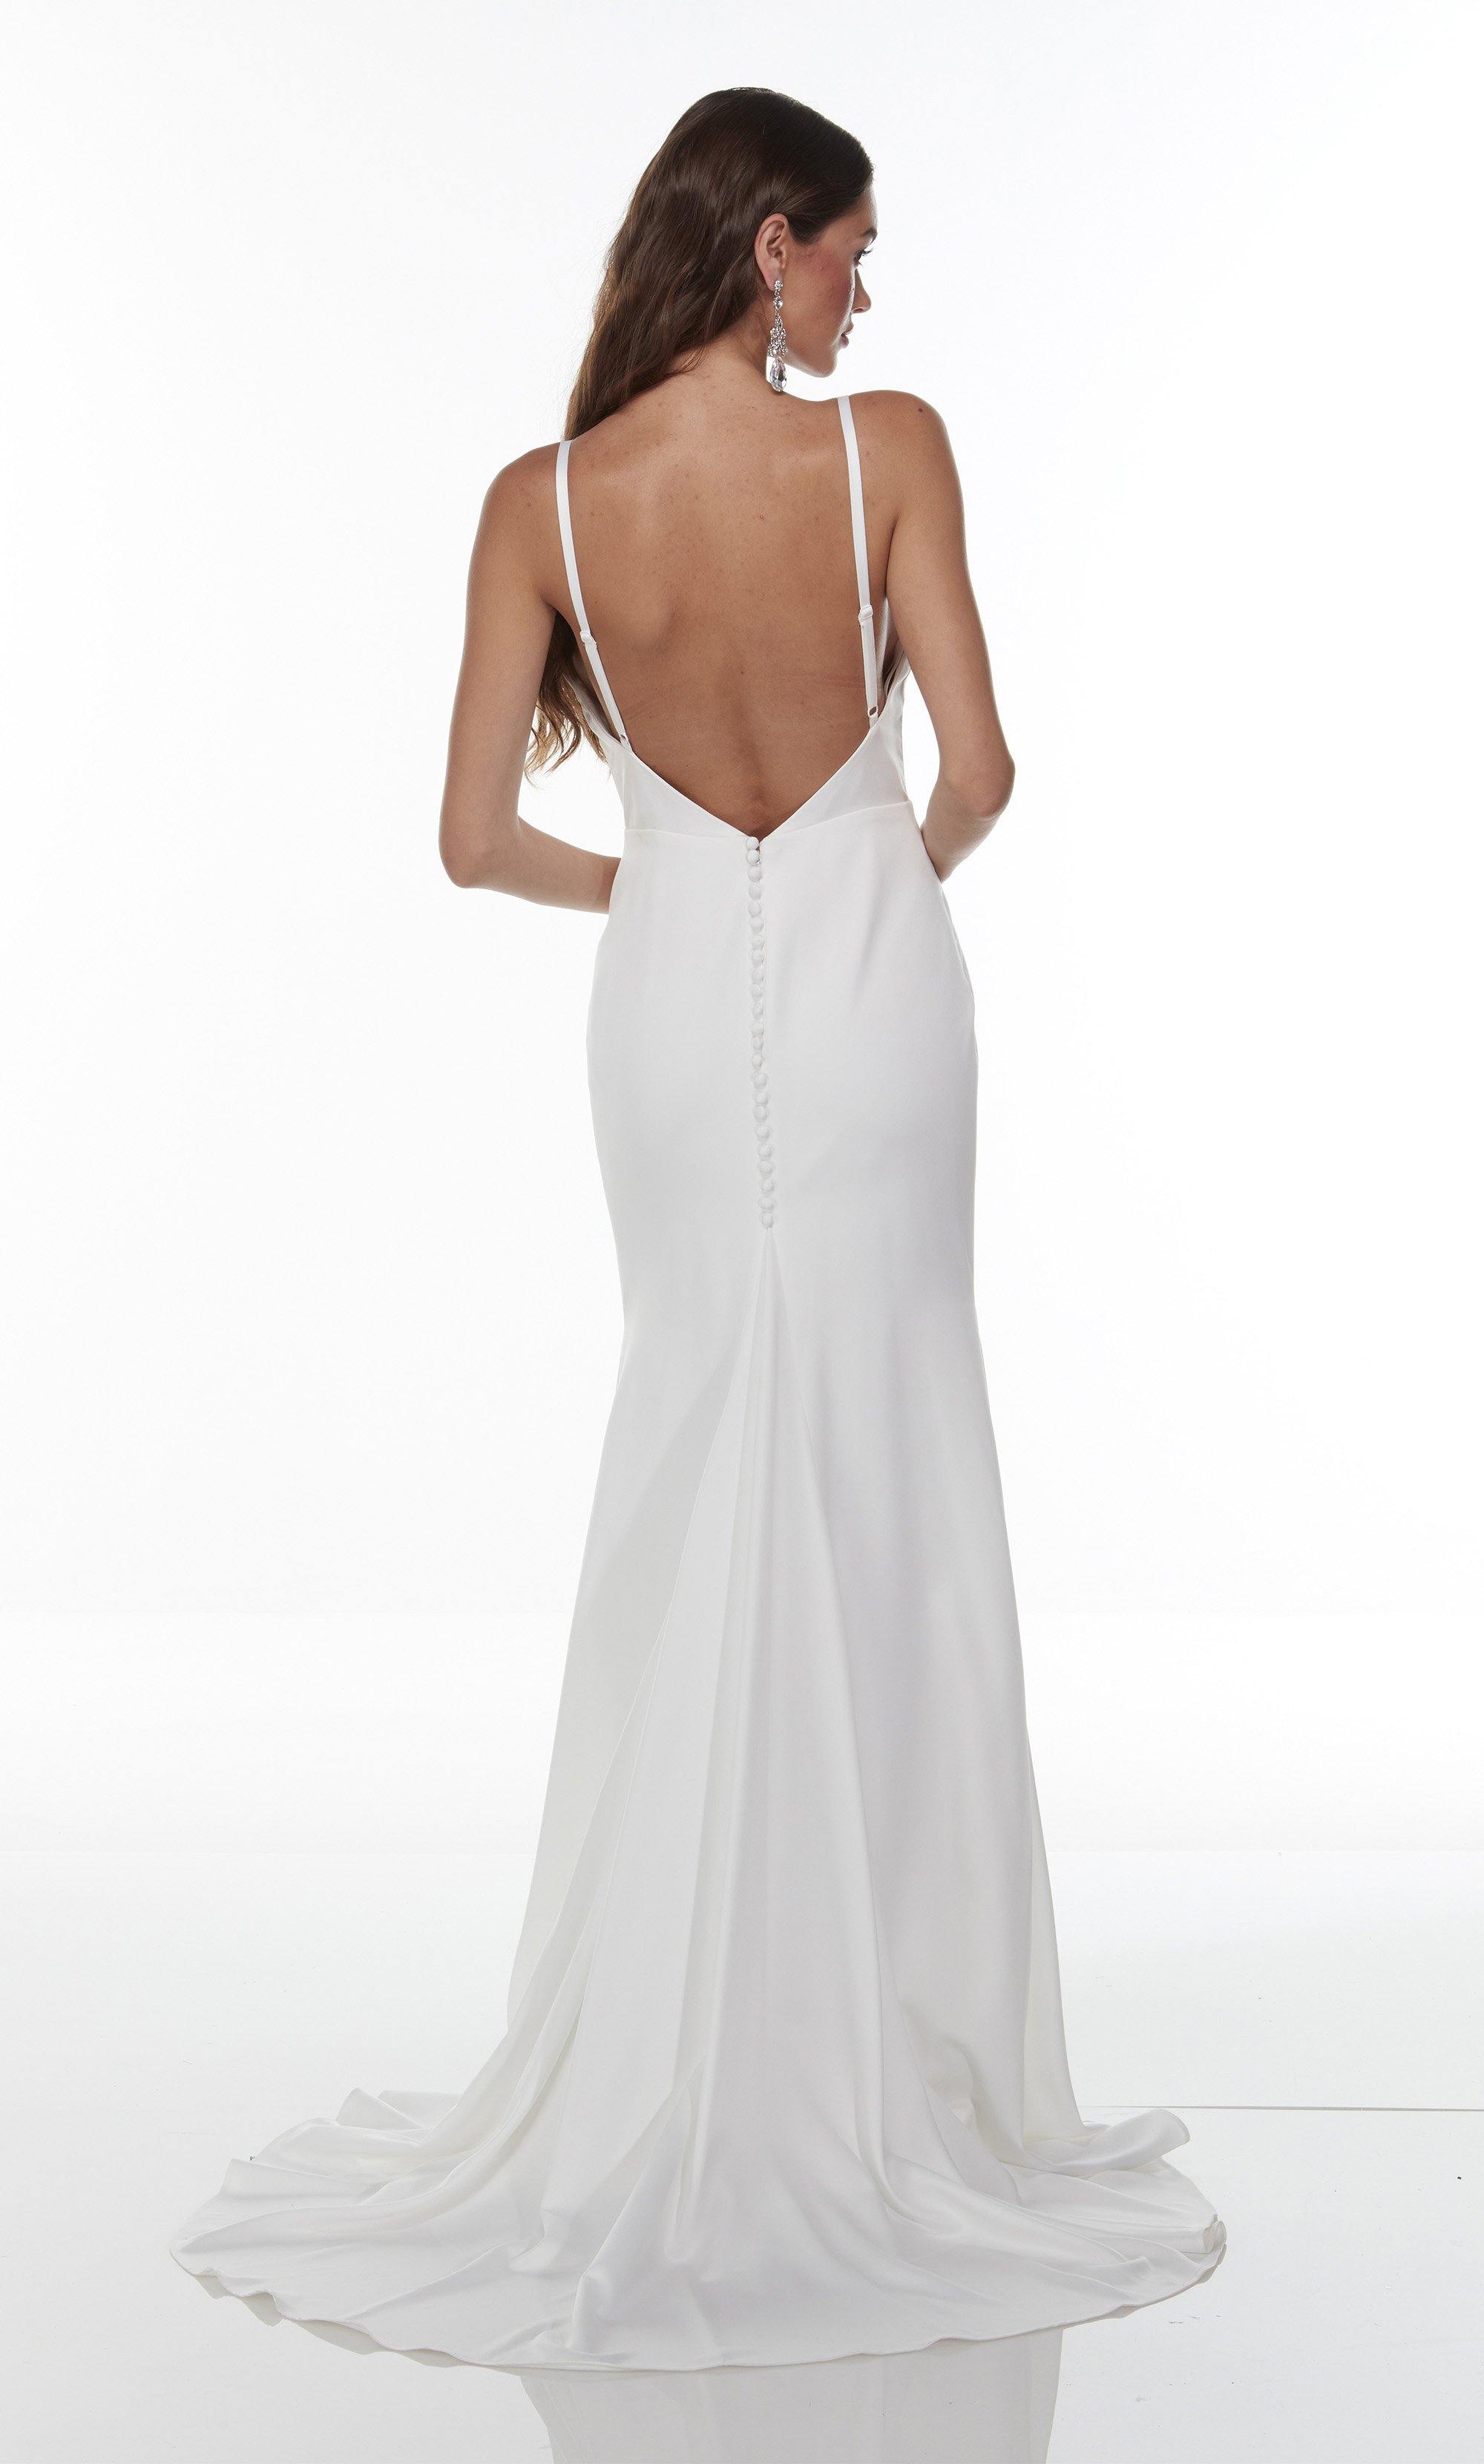 Formal Dress: 7051. Long White Dress, Cowl Neck, Fit N Flare Alyce Paris